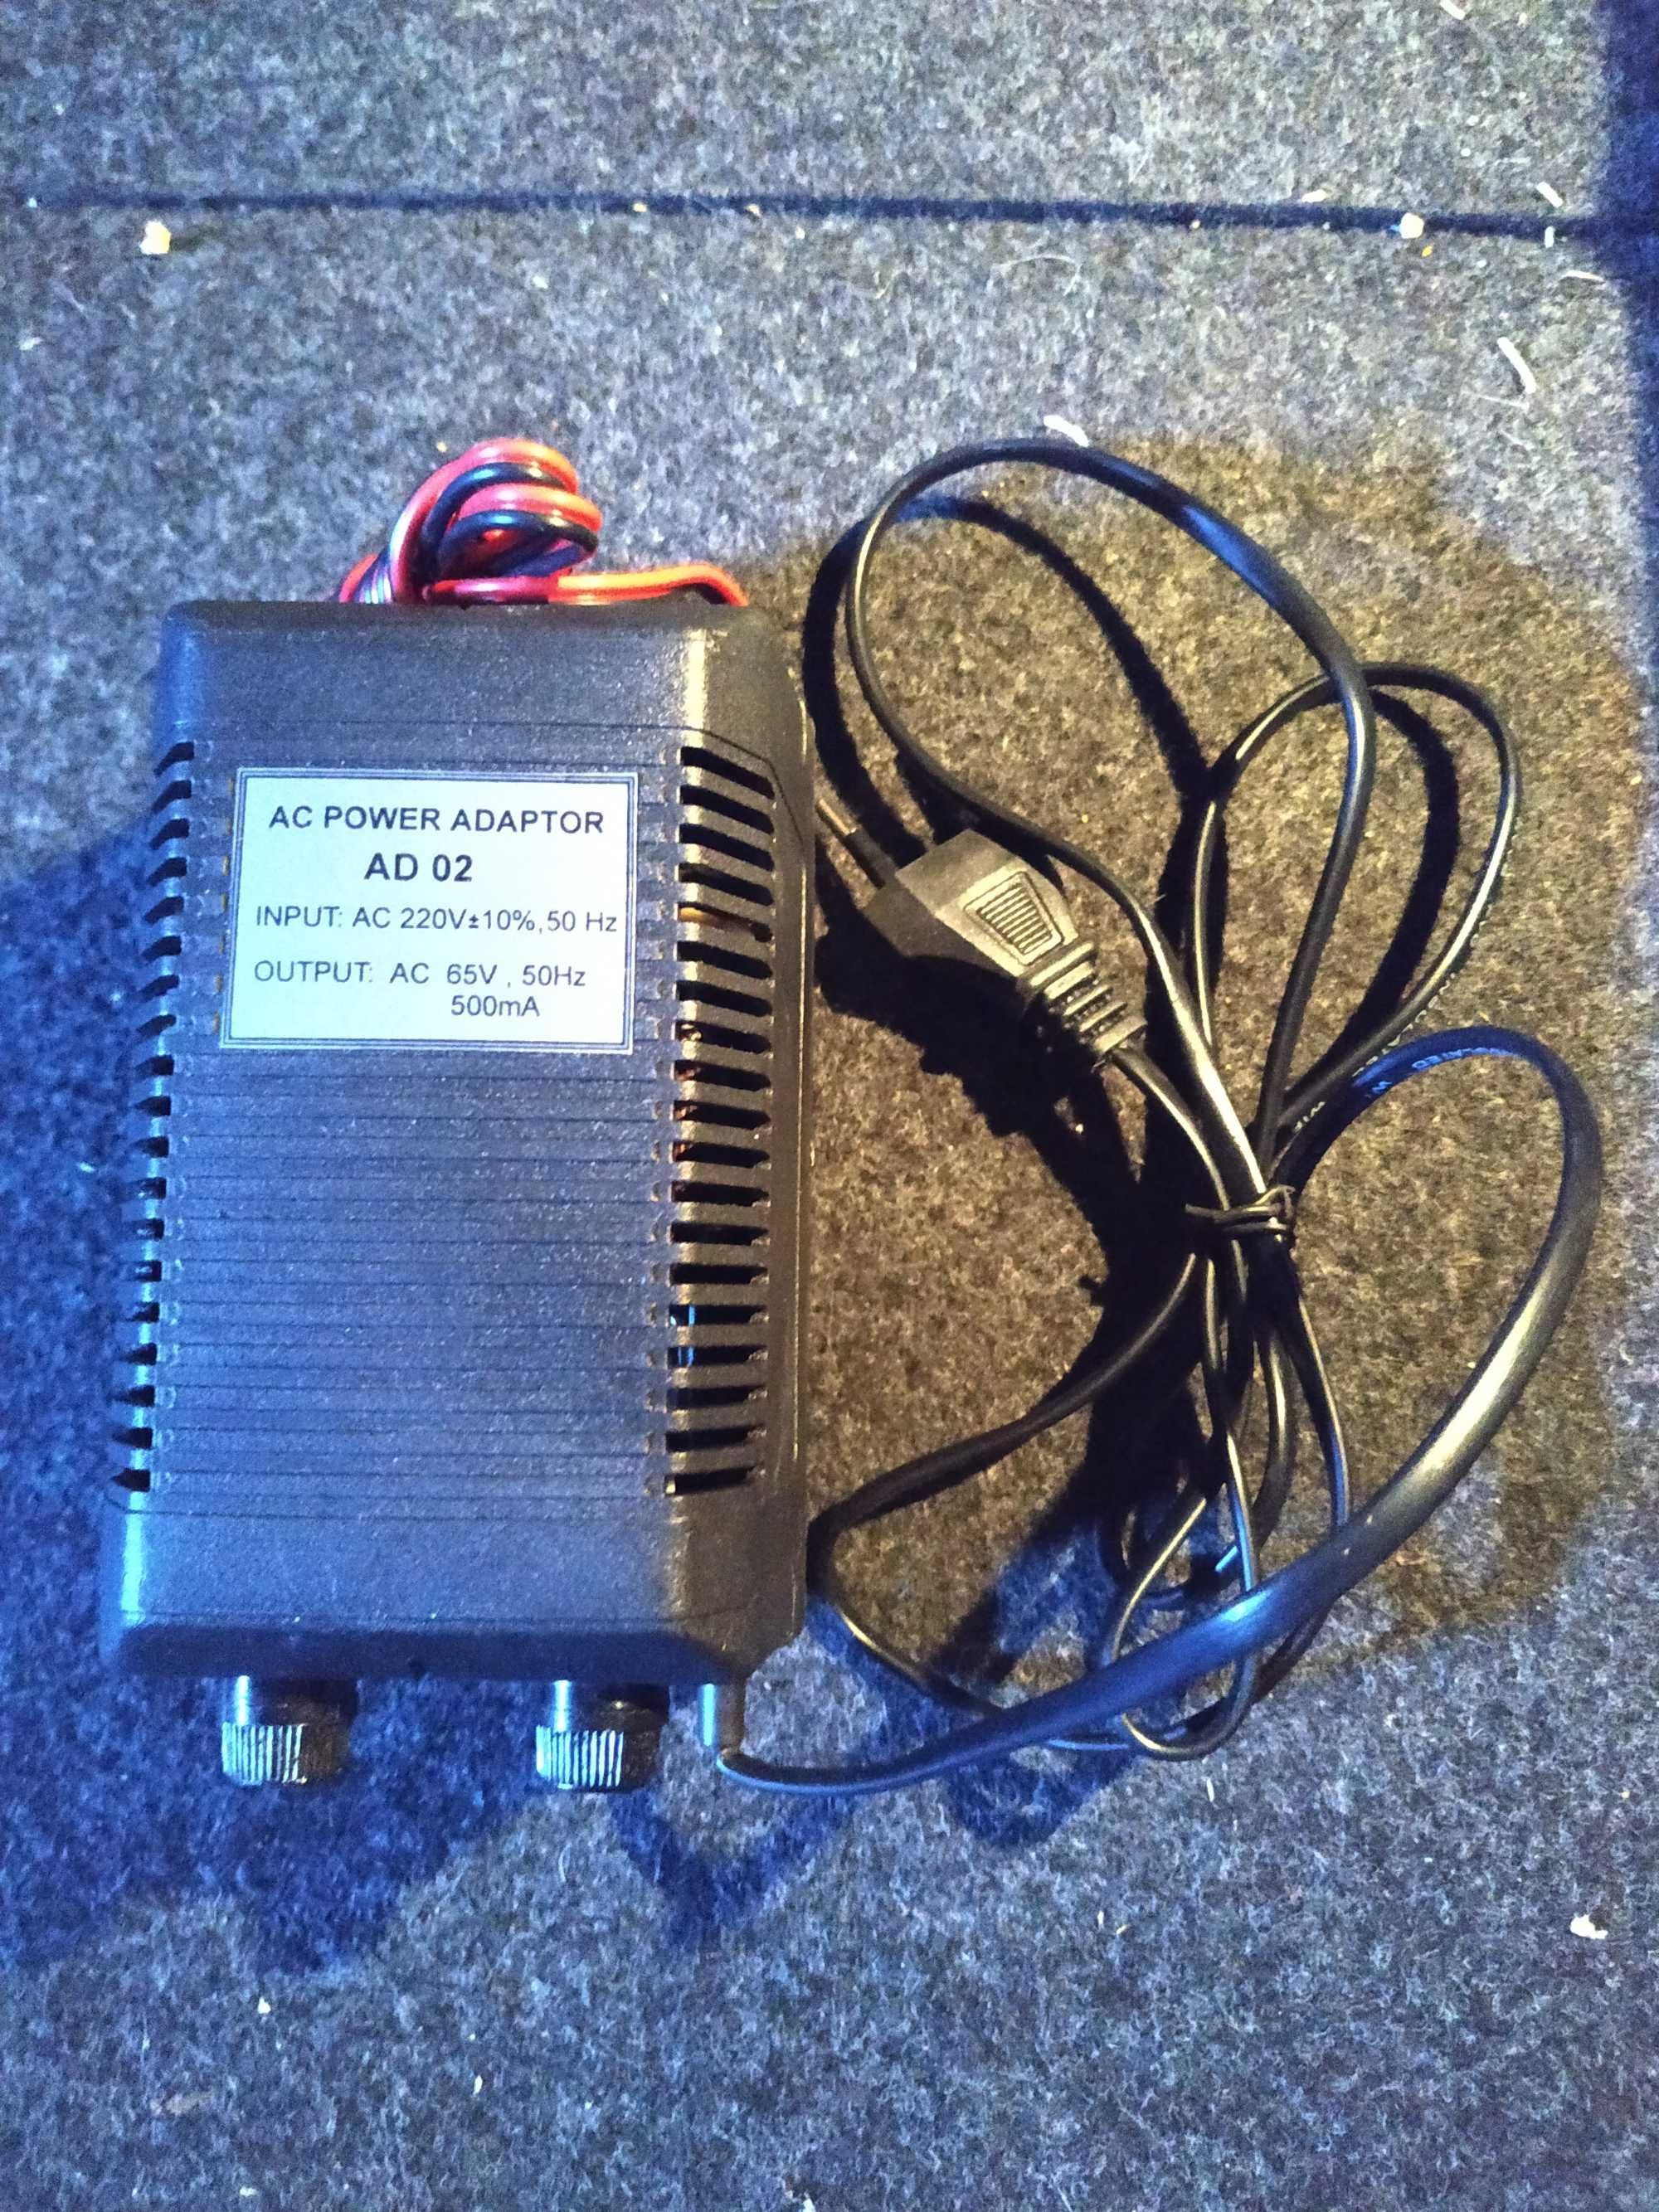 AC Power Adapter AD02